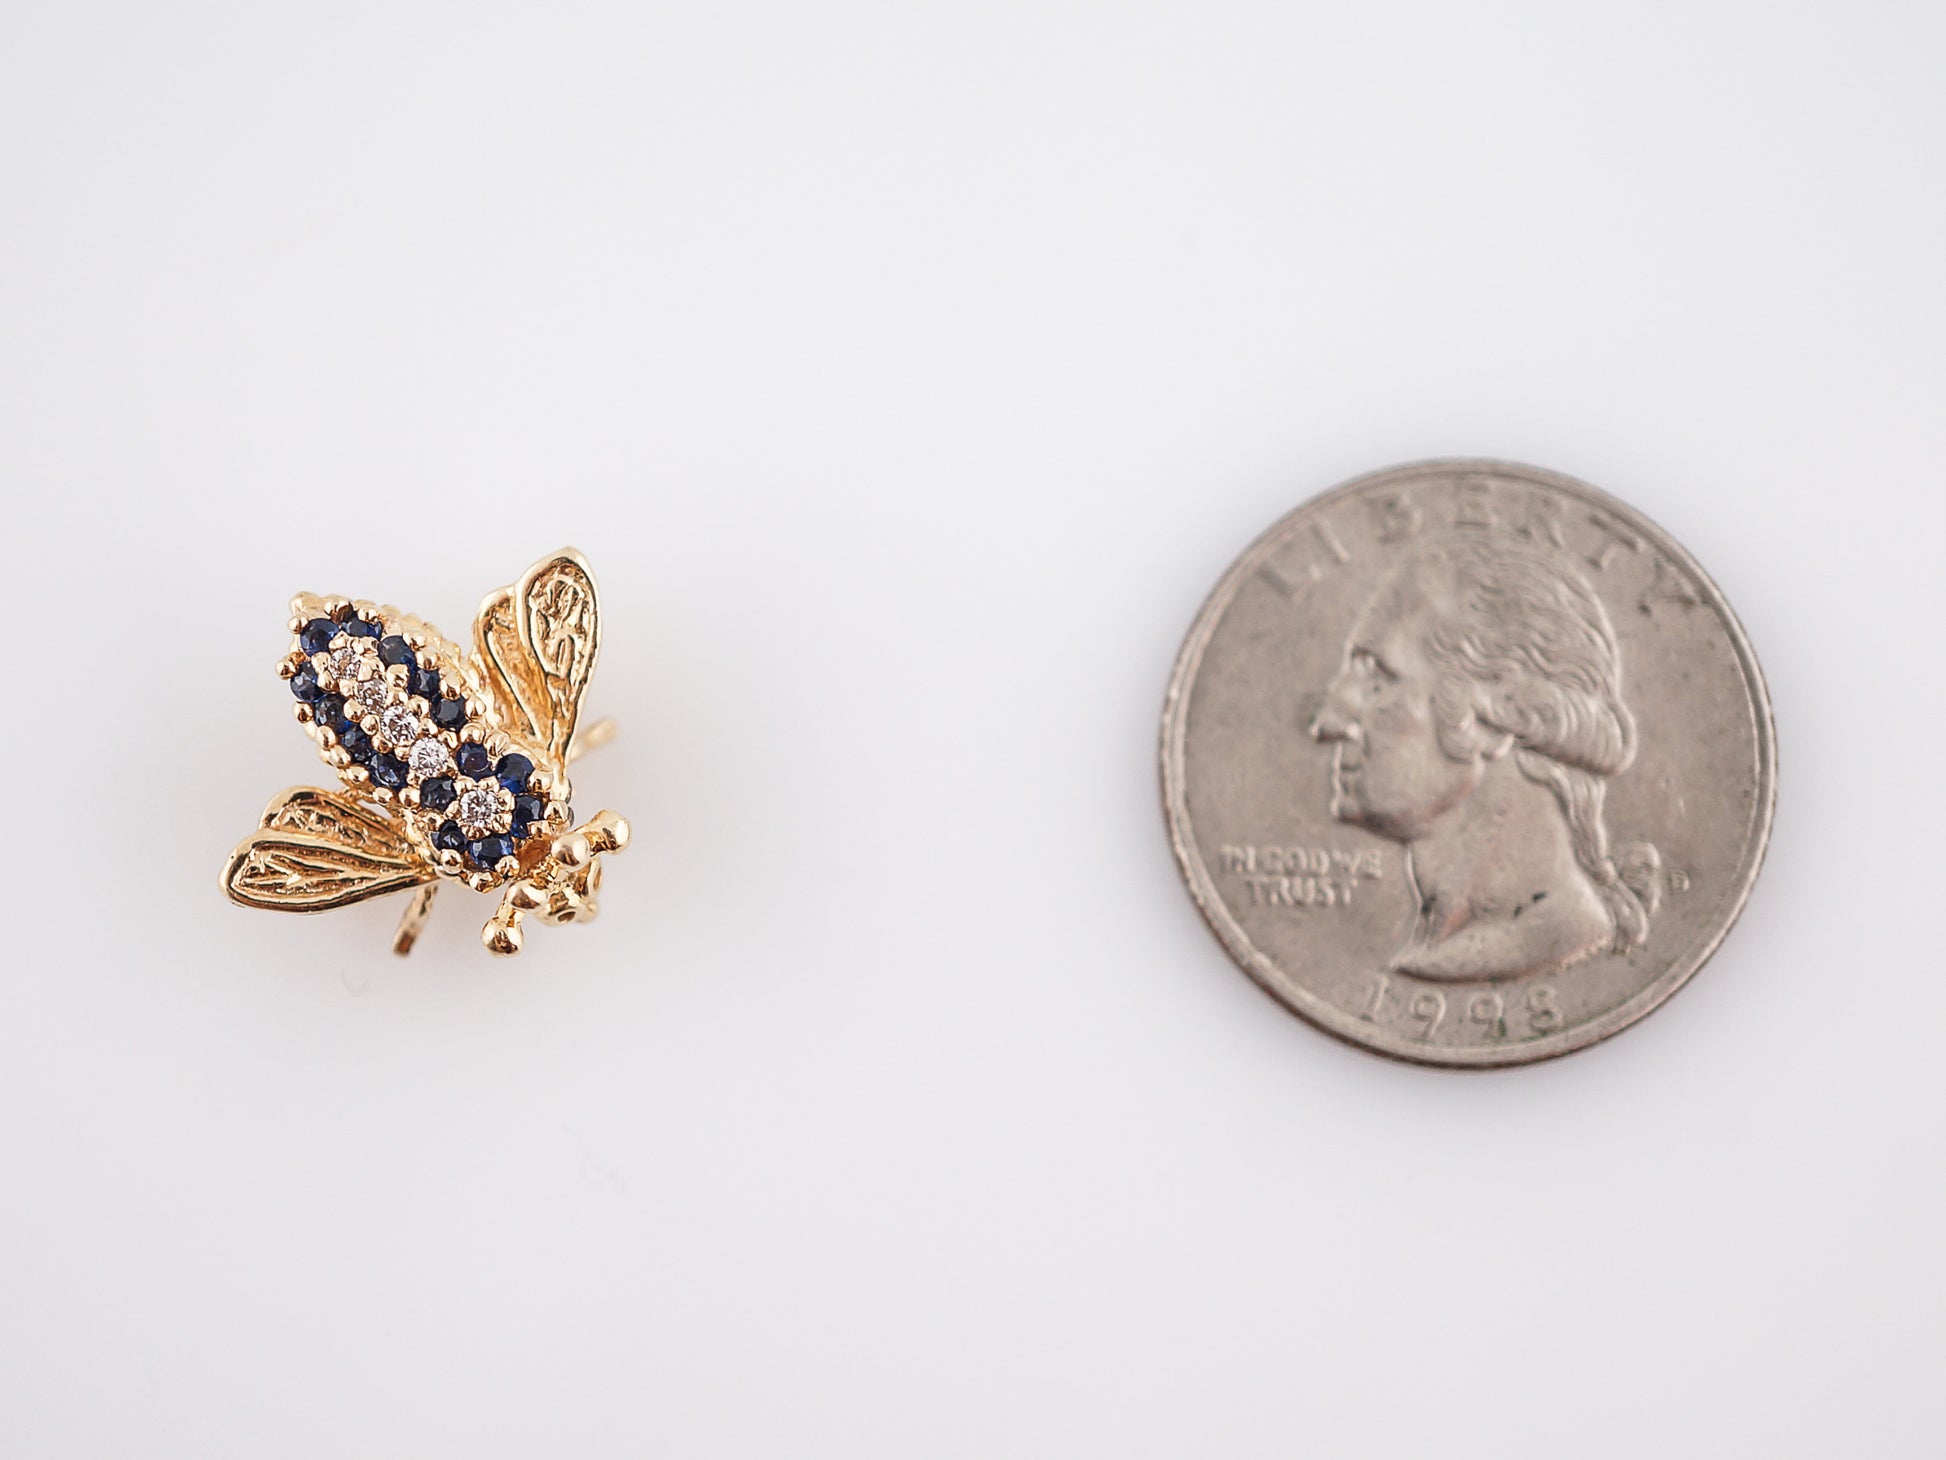 Vintage Bee Pin Mid Century .30 Round Cut Sapphire & .025 Round Brilliant Cut Diamonds in 14k Yellow Gold